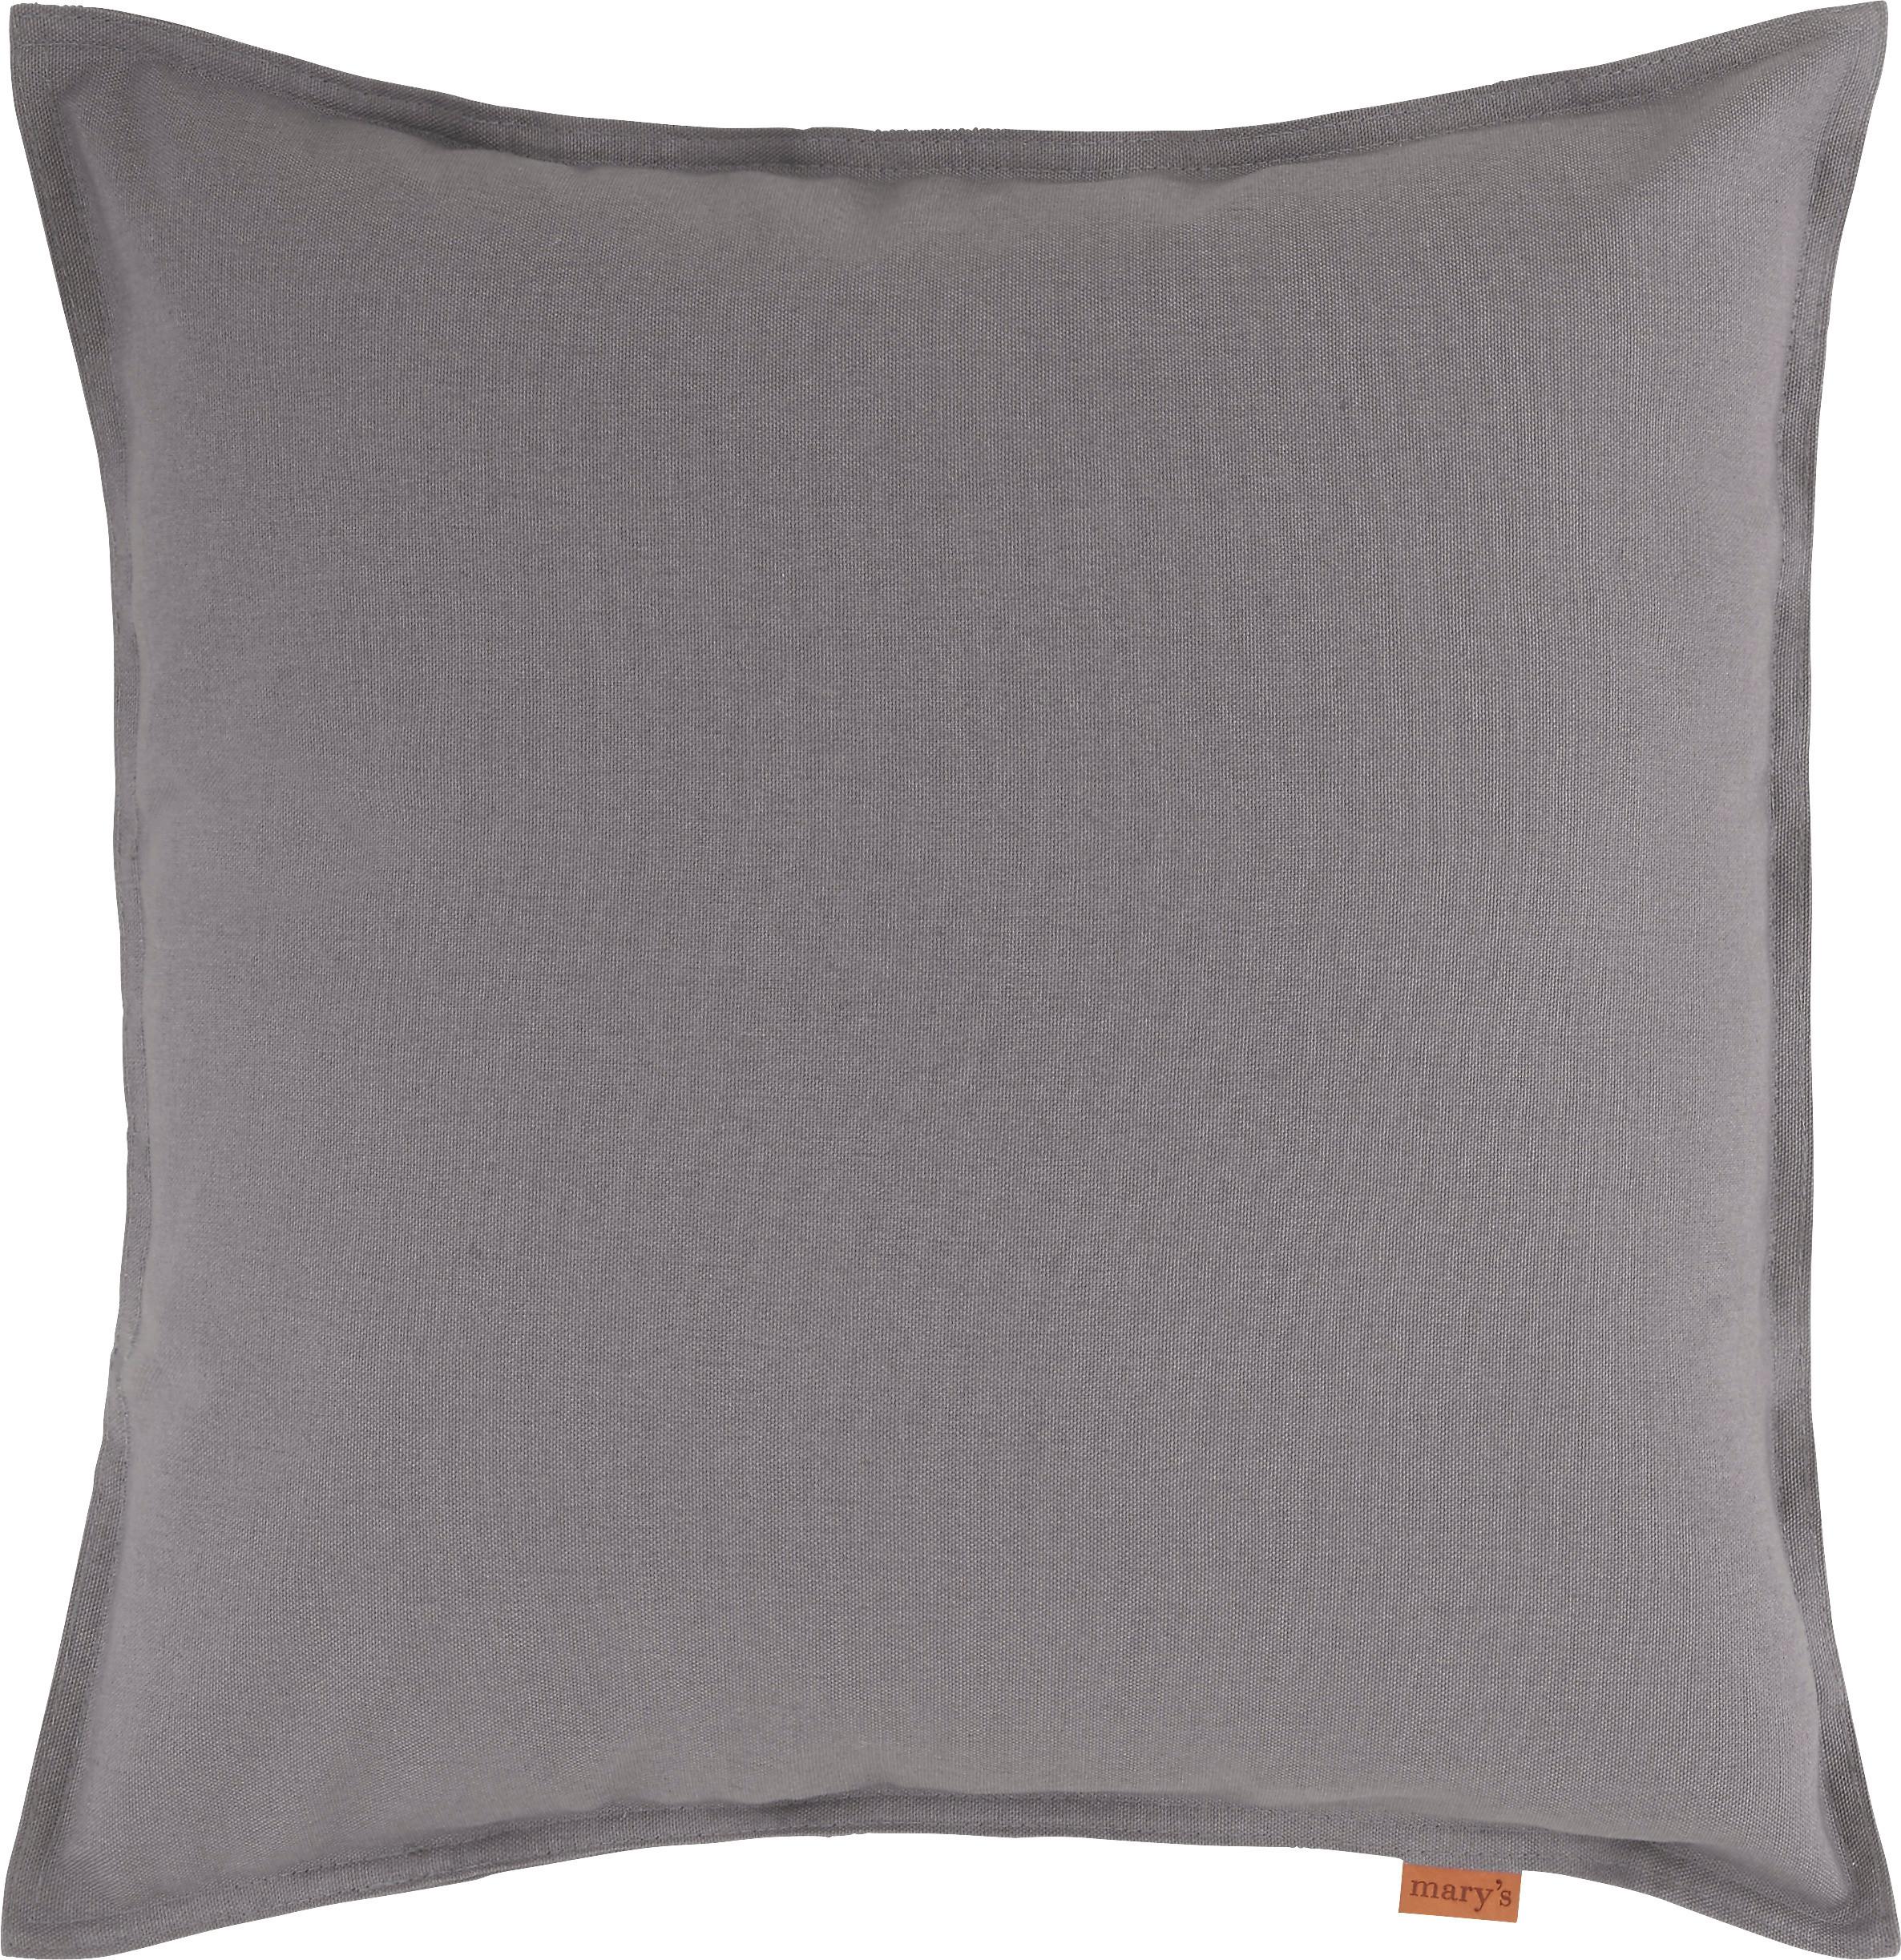 Zierkissen Jenni Jute in Grau ca. 60x60cm - Grau, Modern, Textil (60/60cm) - Mary's